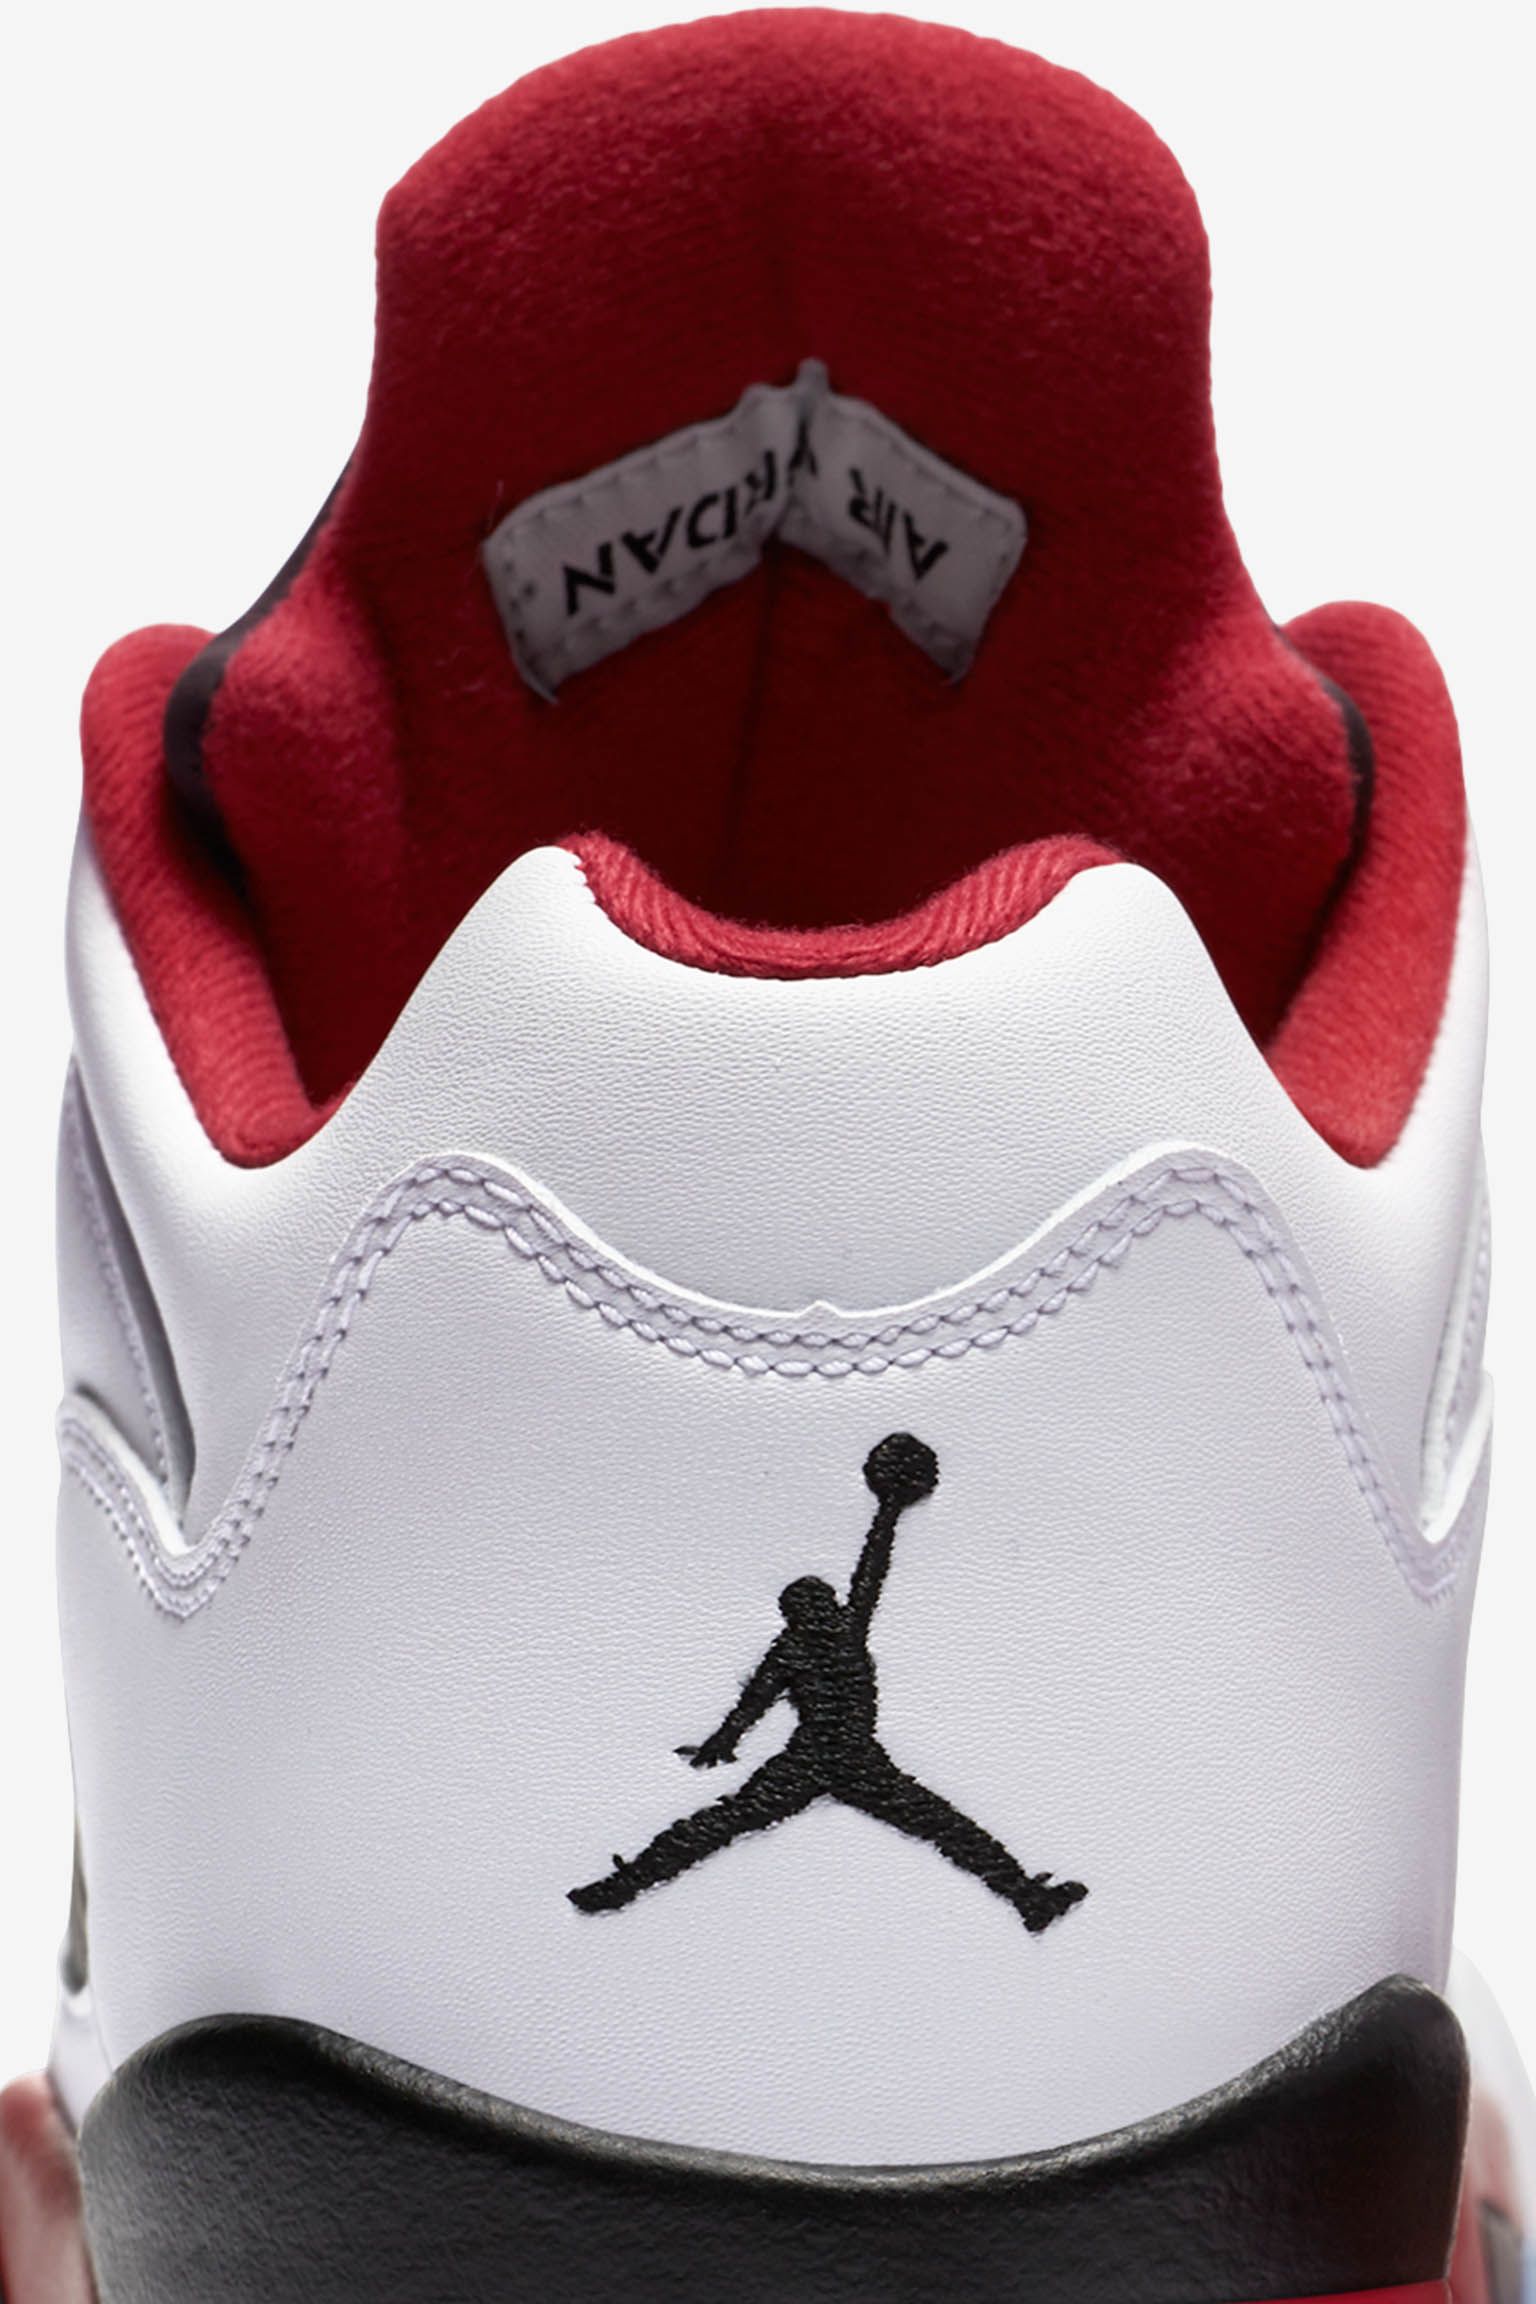 Air Jordan 5 Retro Low 'Fire Red' Release Date. Nike SNKRS